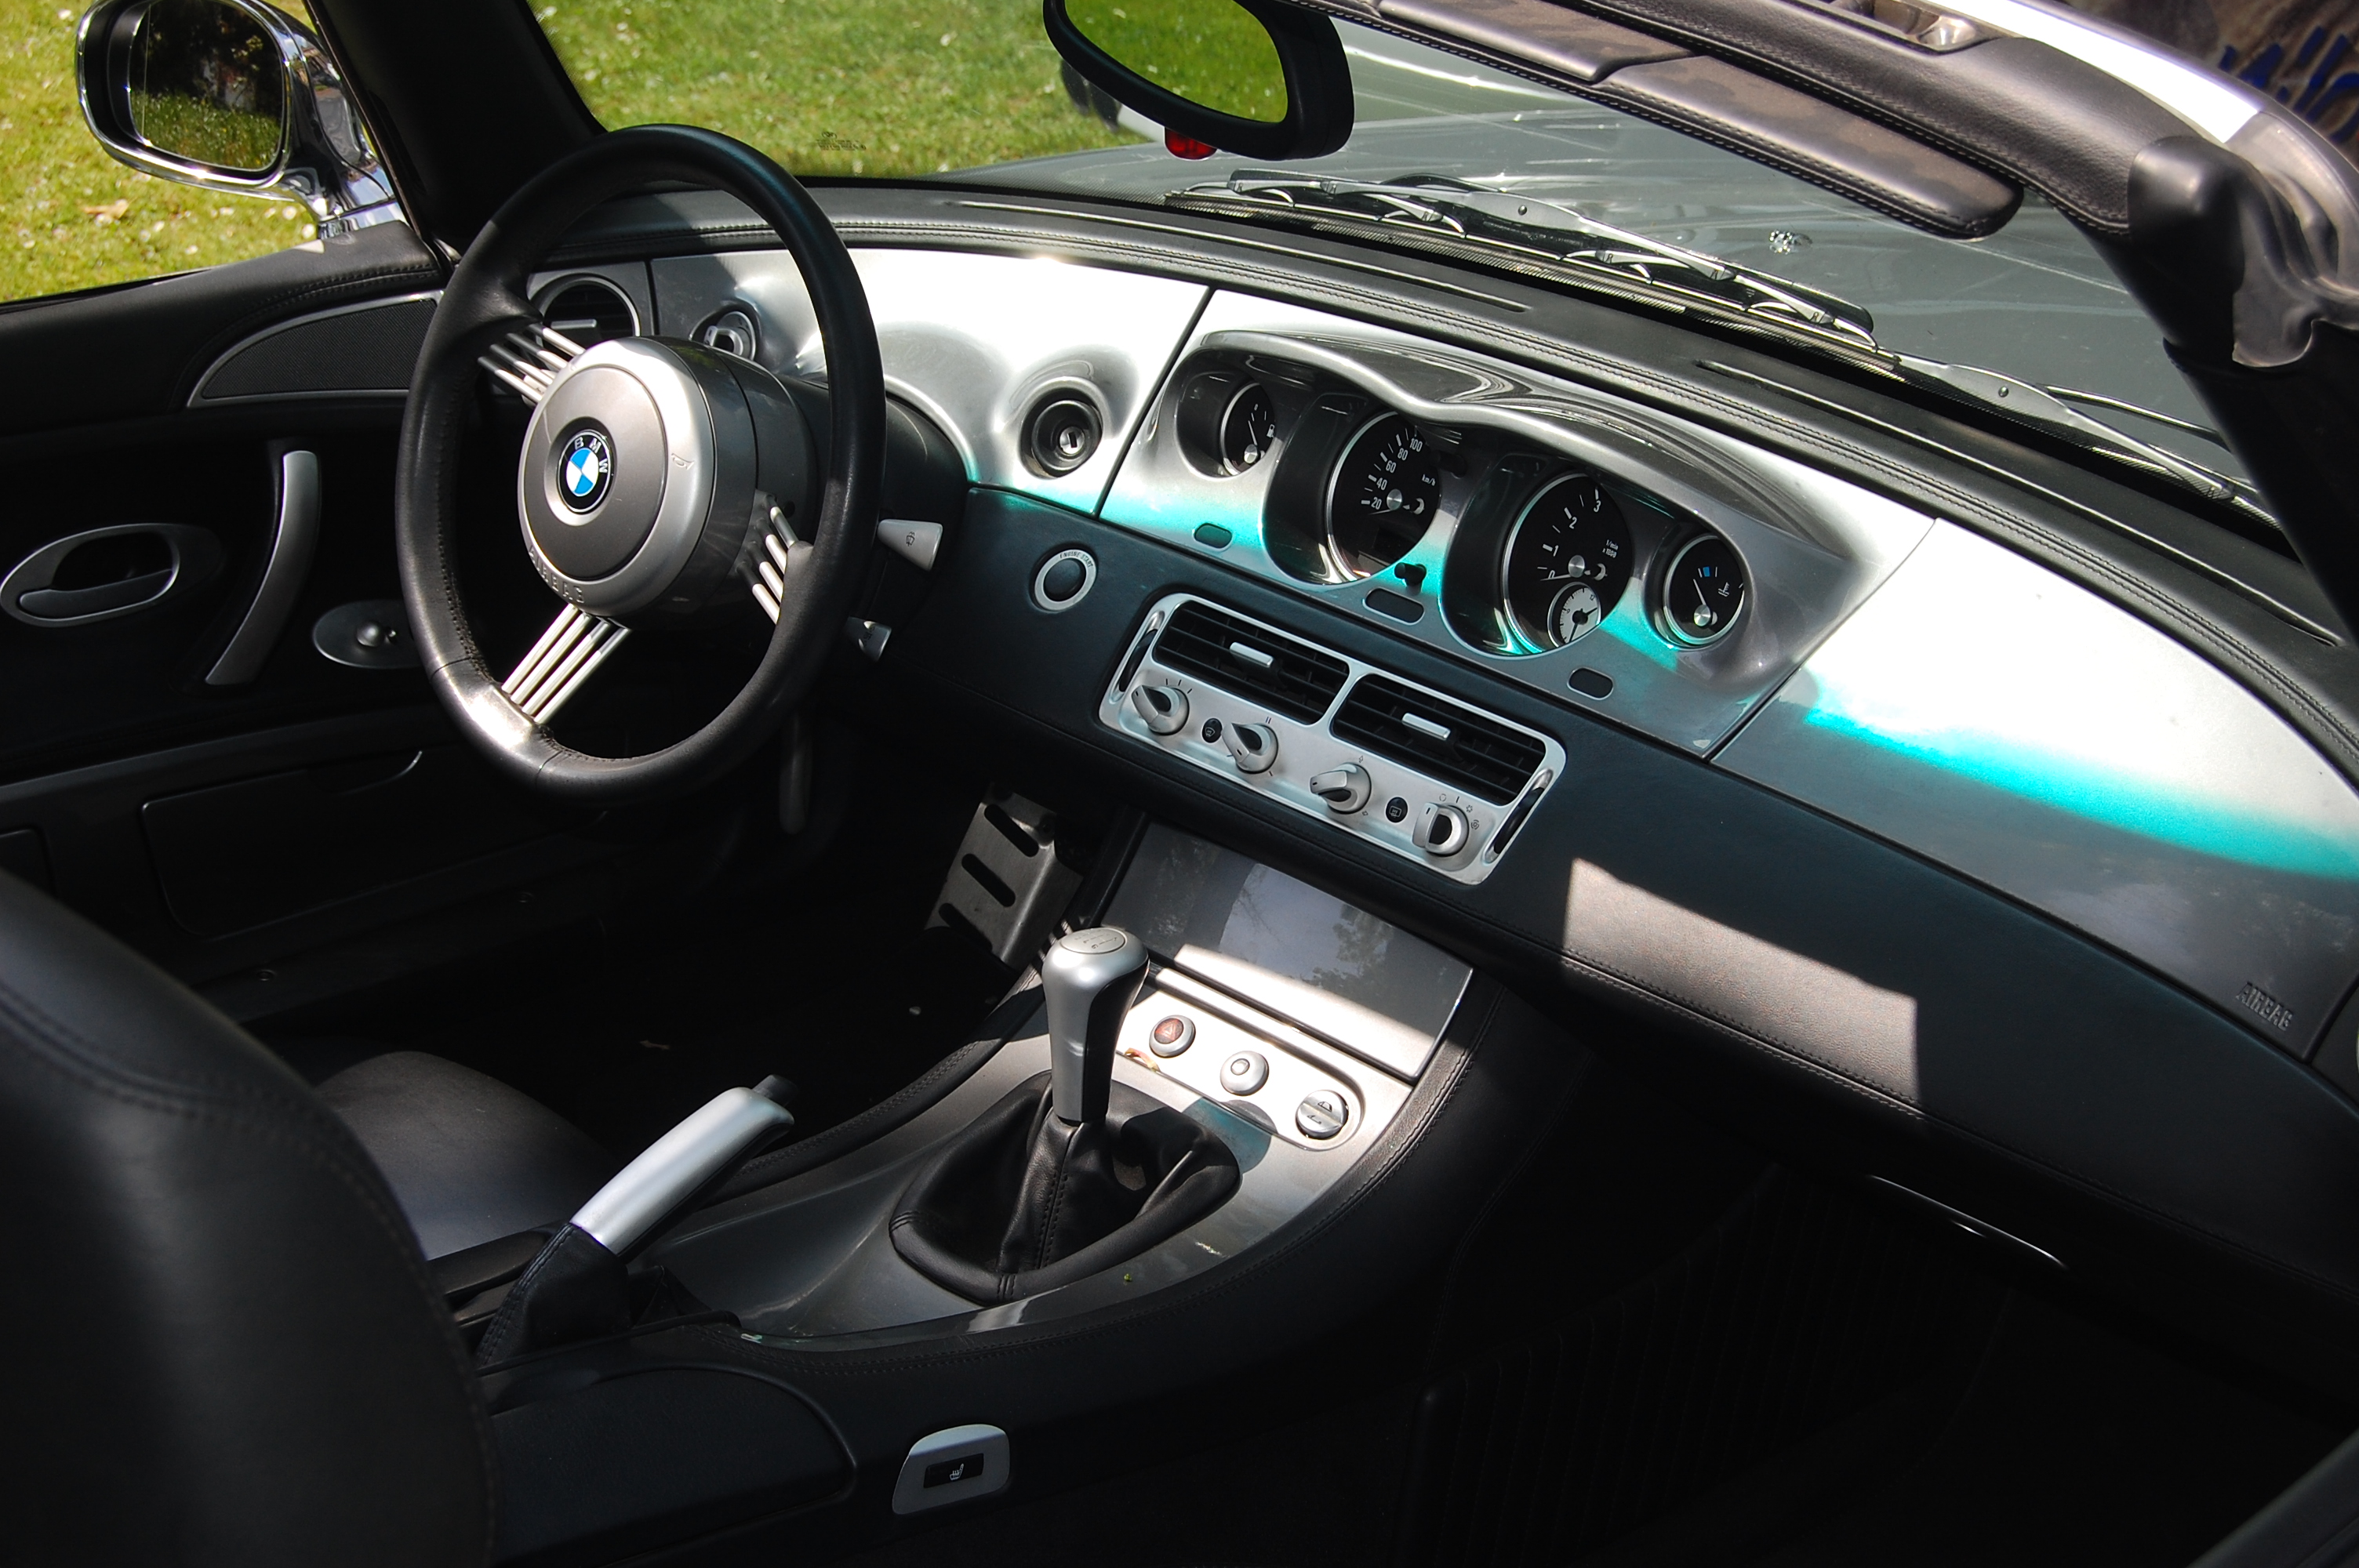 BMW Z8 interior - Cockpit